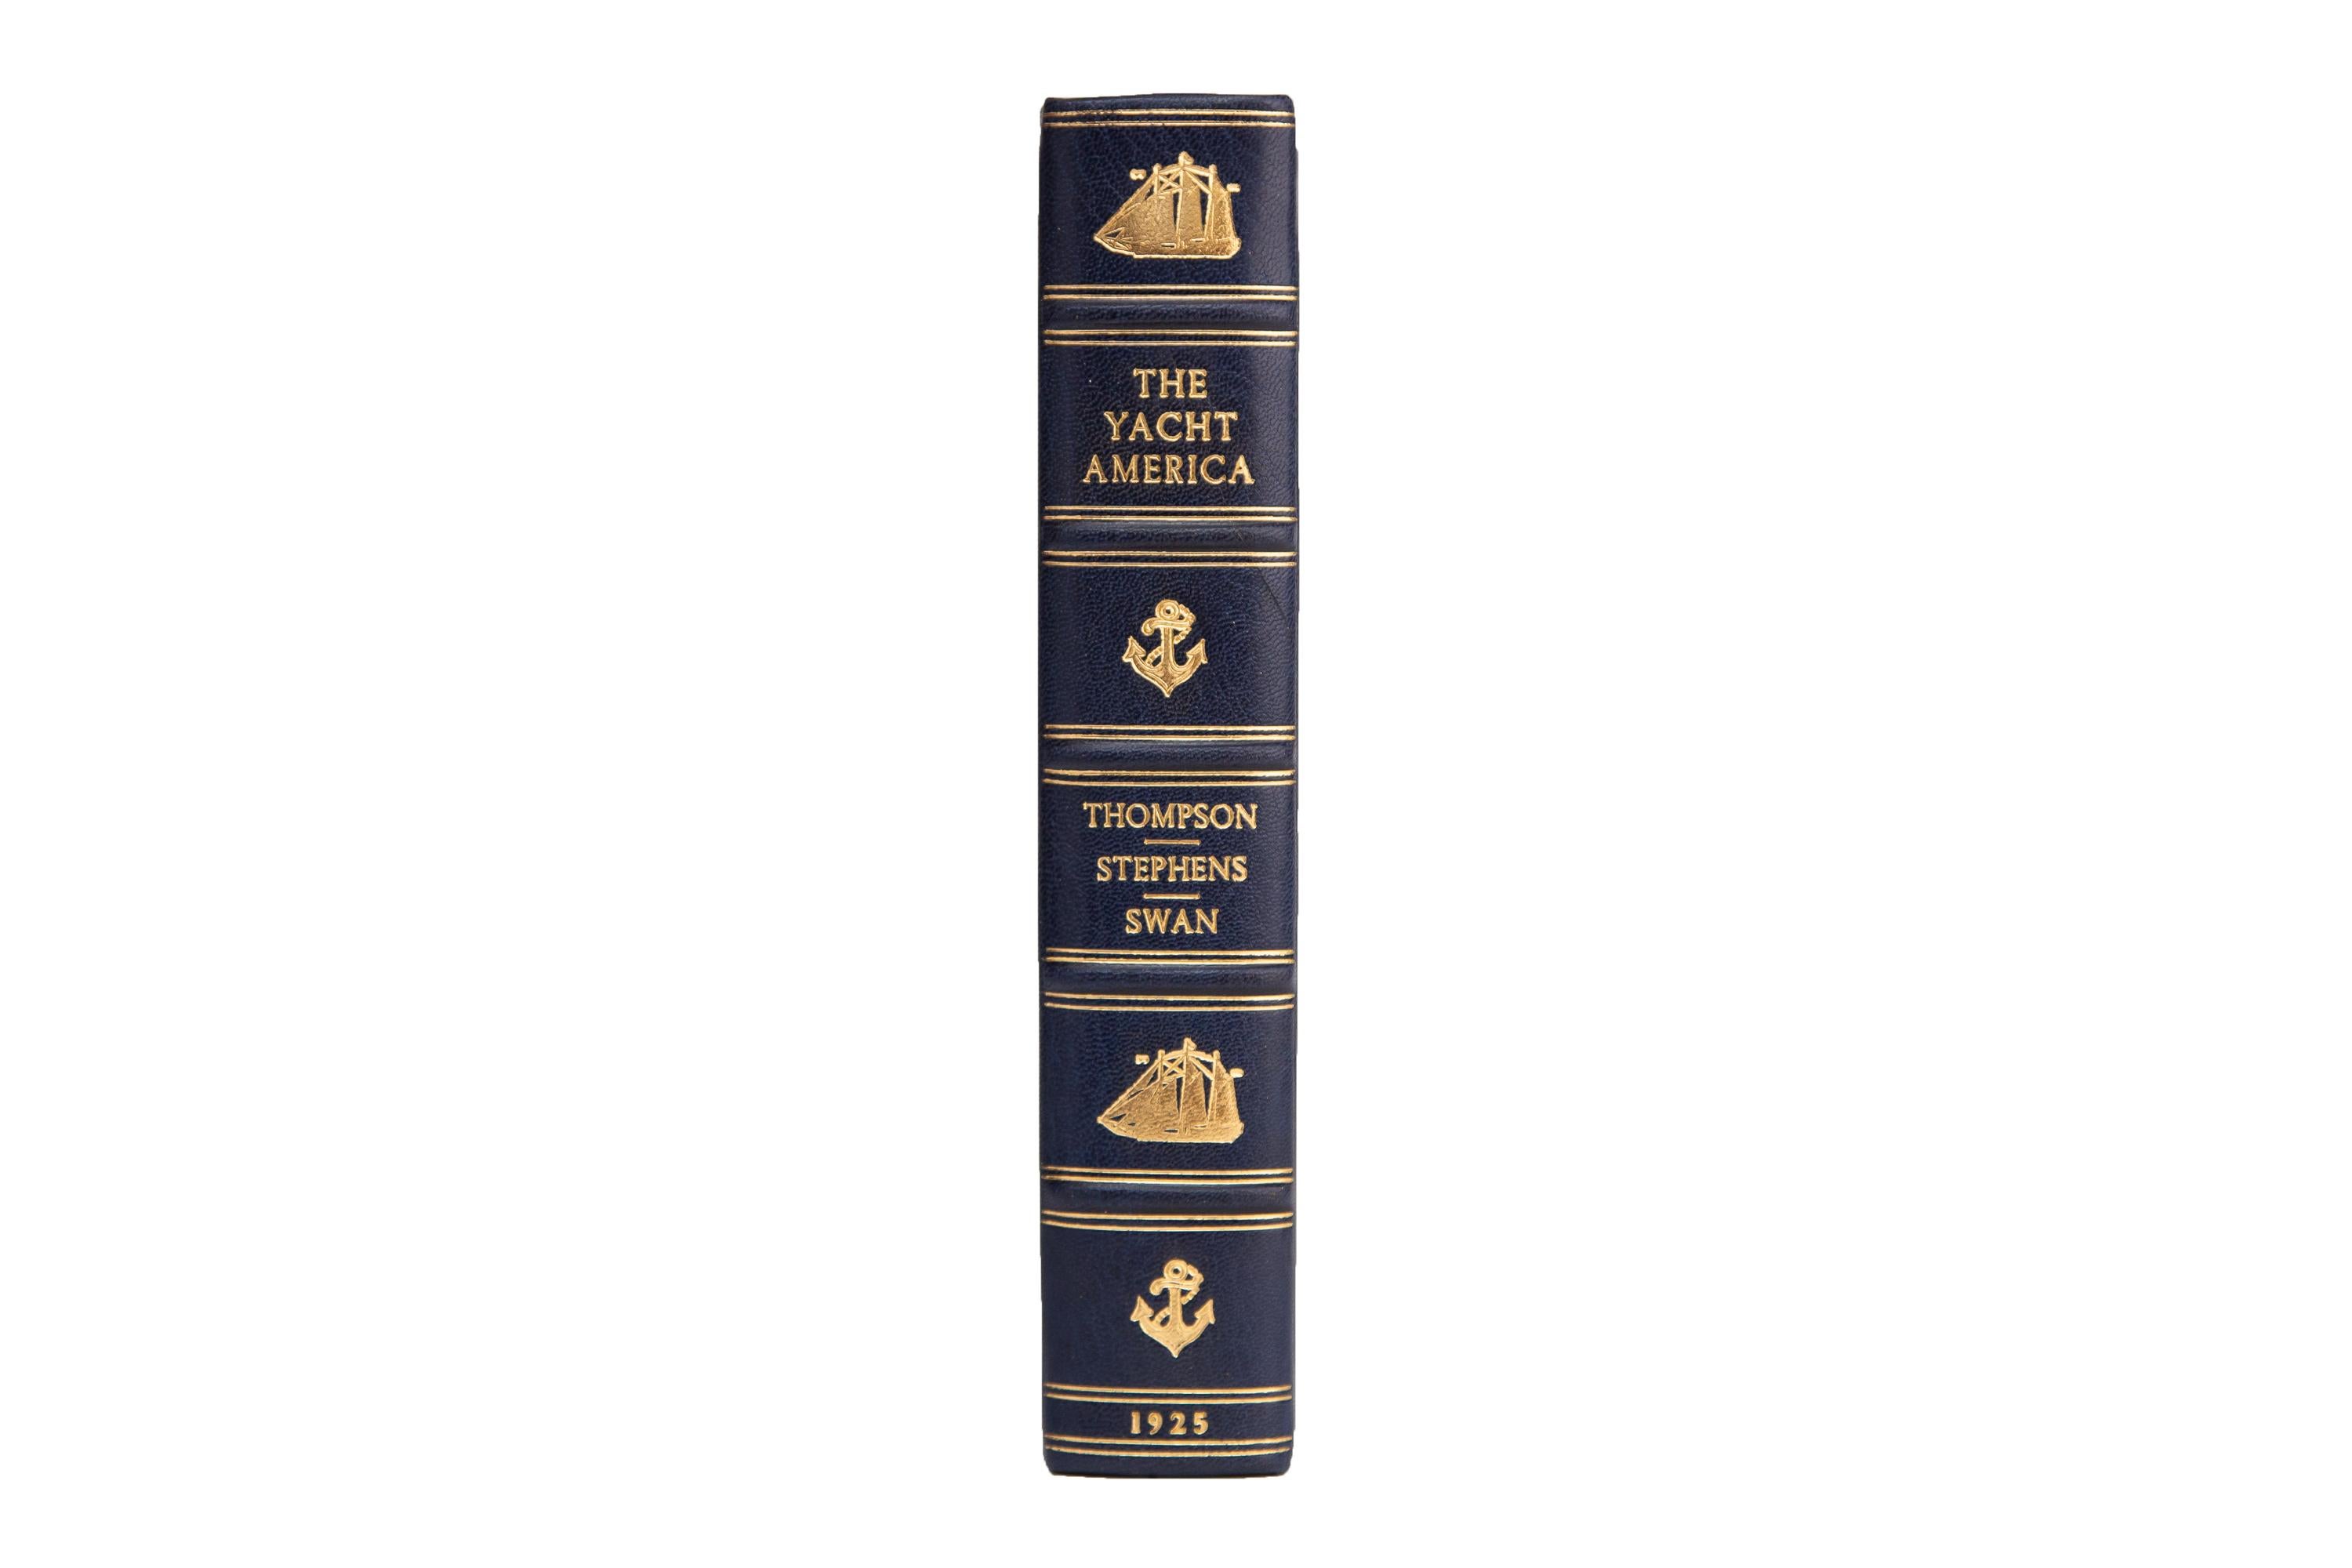 1 Volume, Thompson, Stephens & Swan, the Yacht America